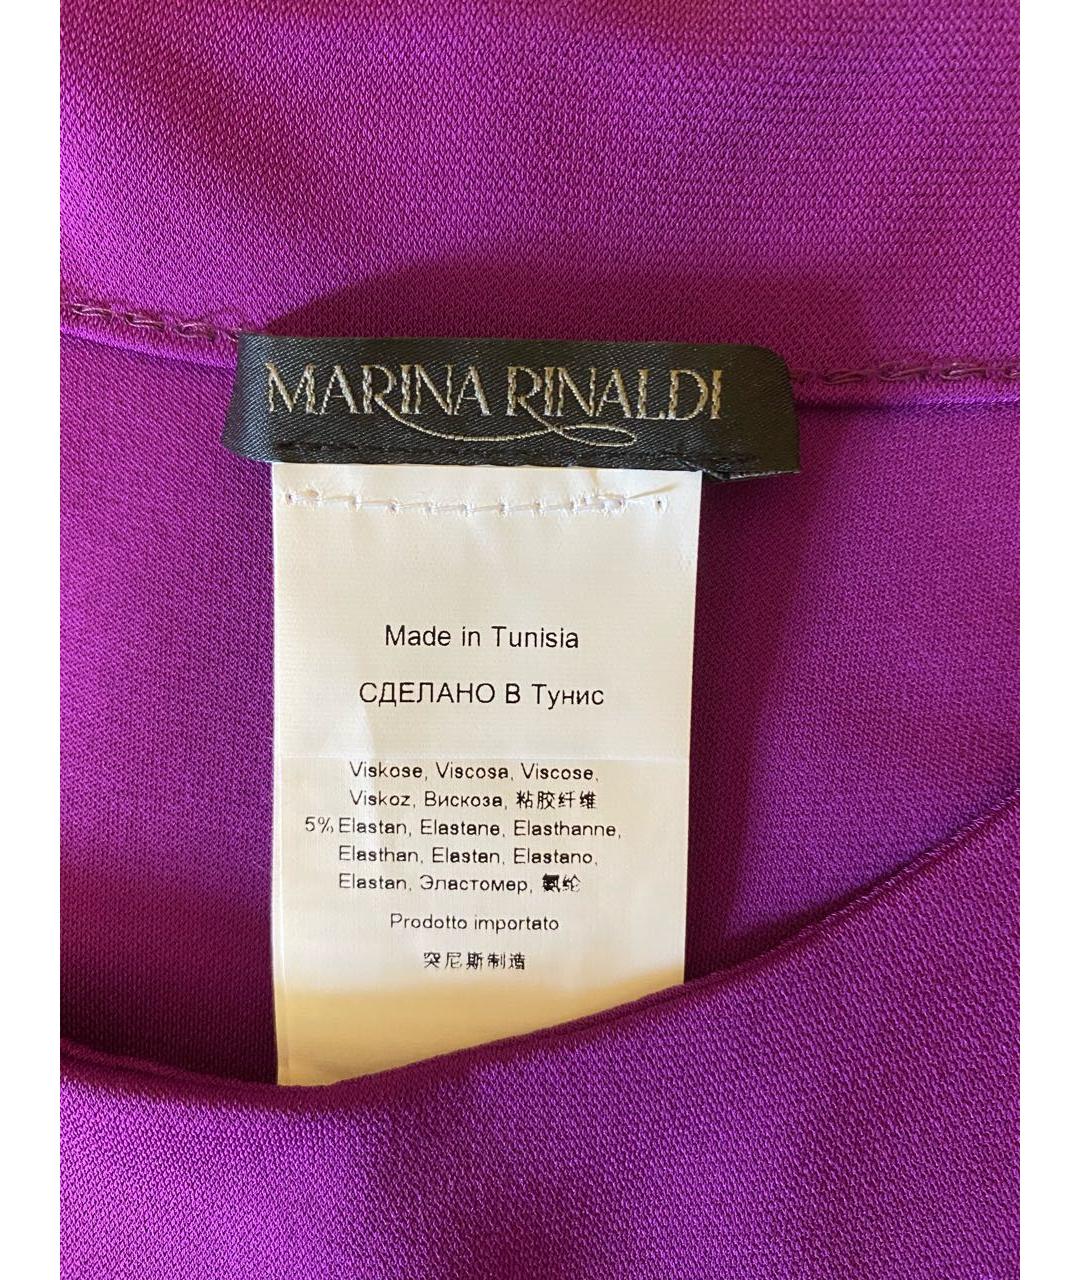 MARINA RINALDI Фиолетовый вискозный сарафан, фото 3